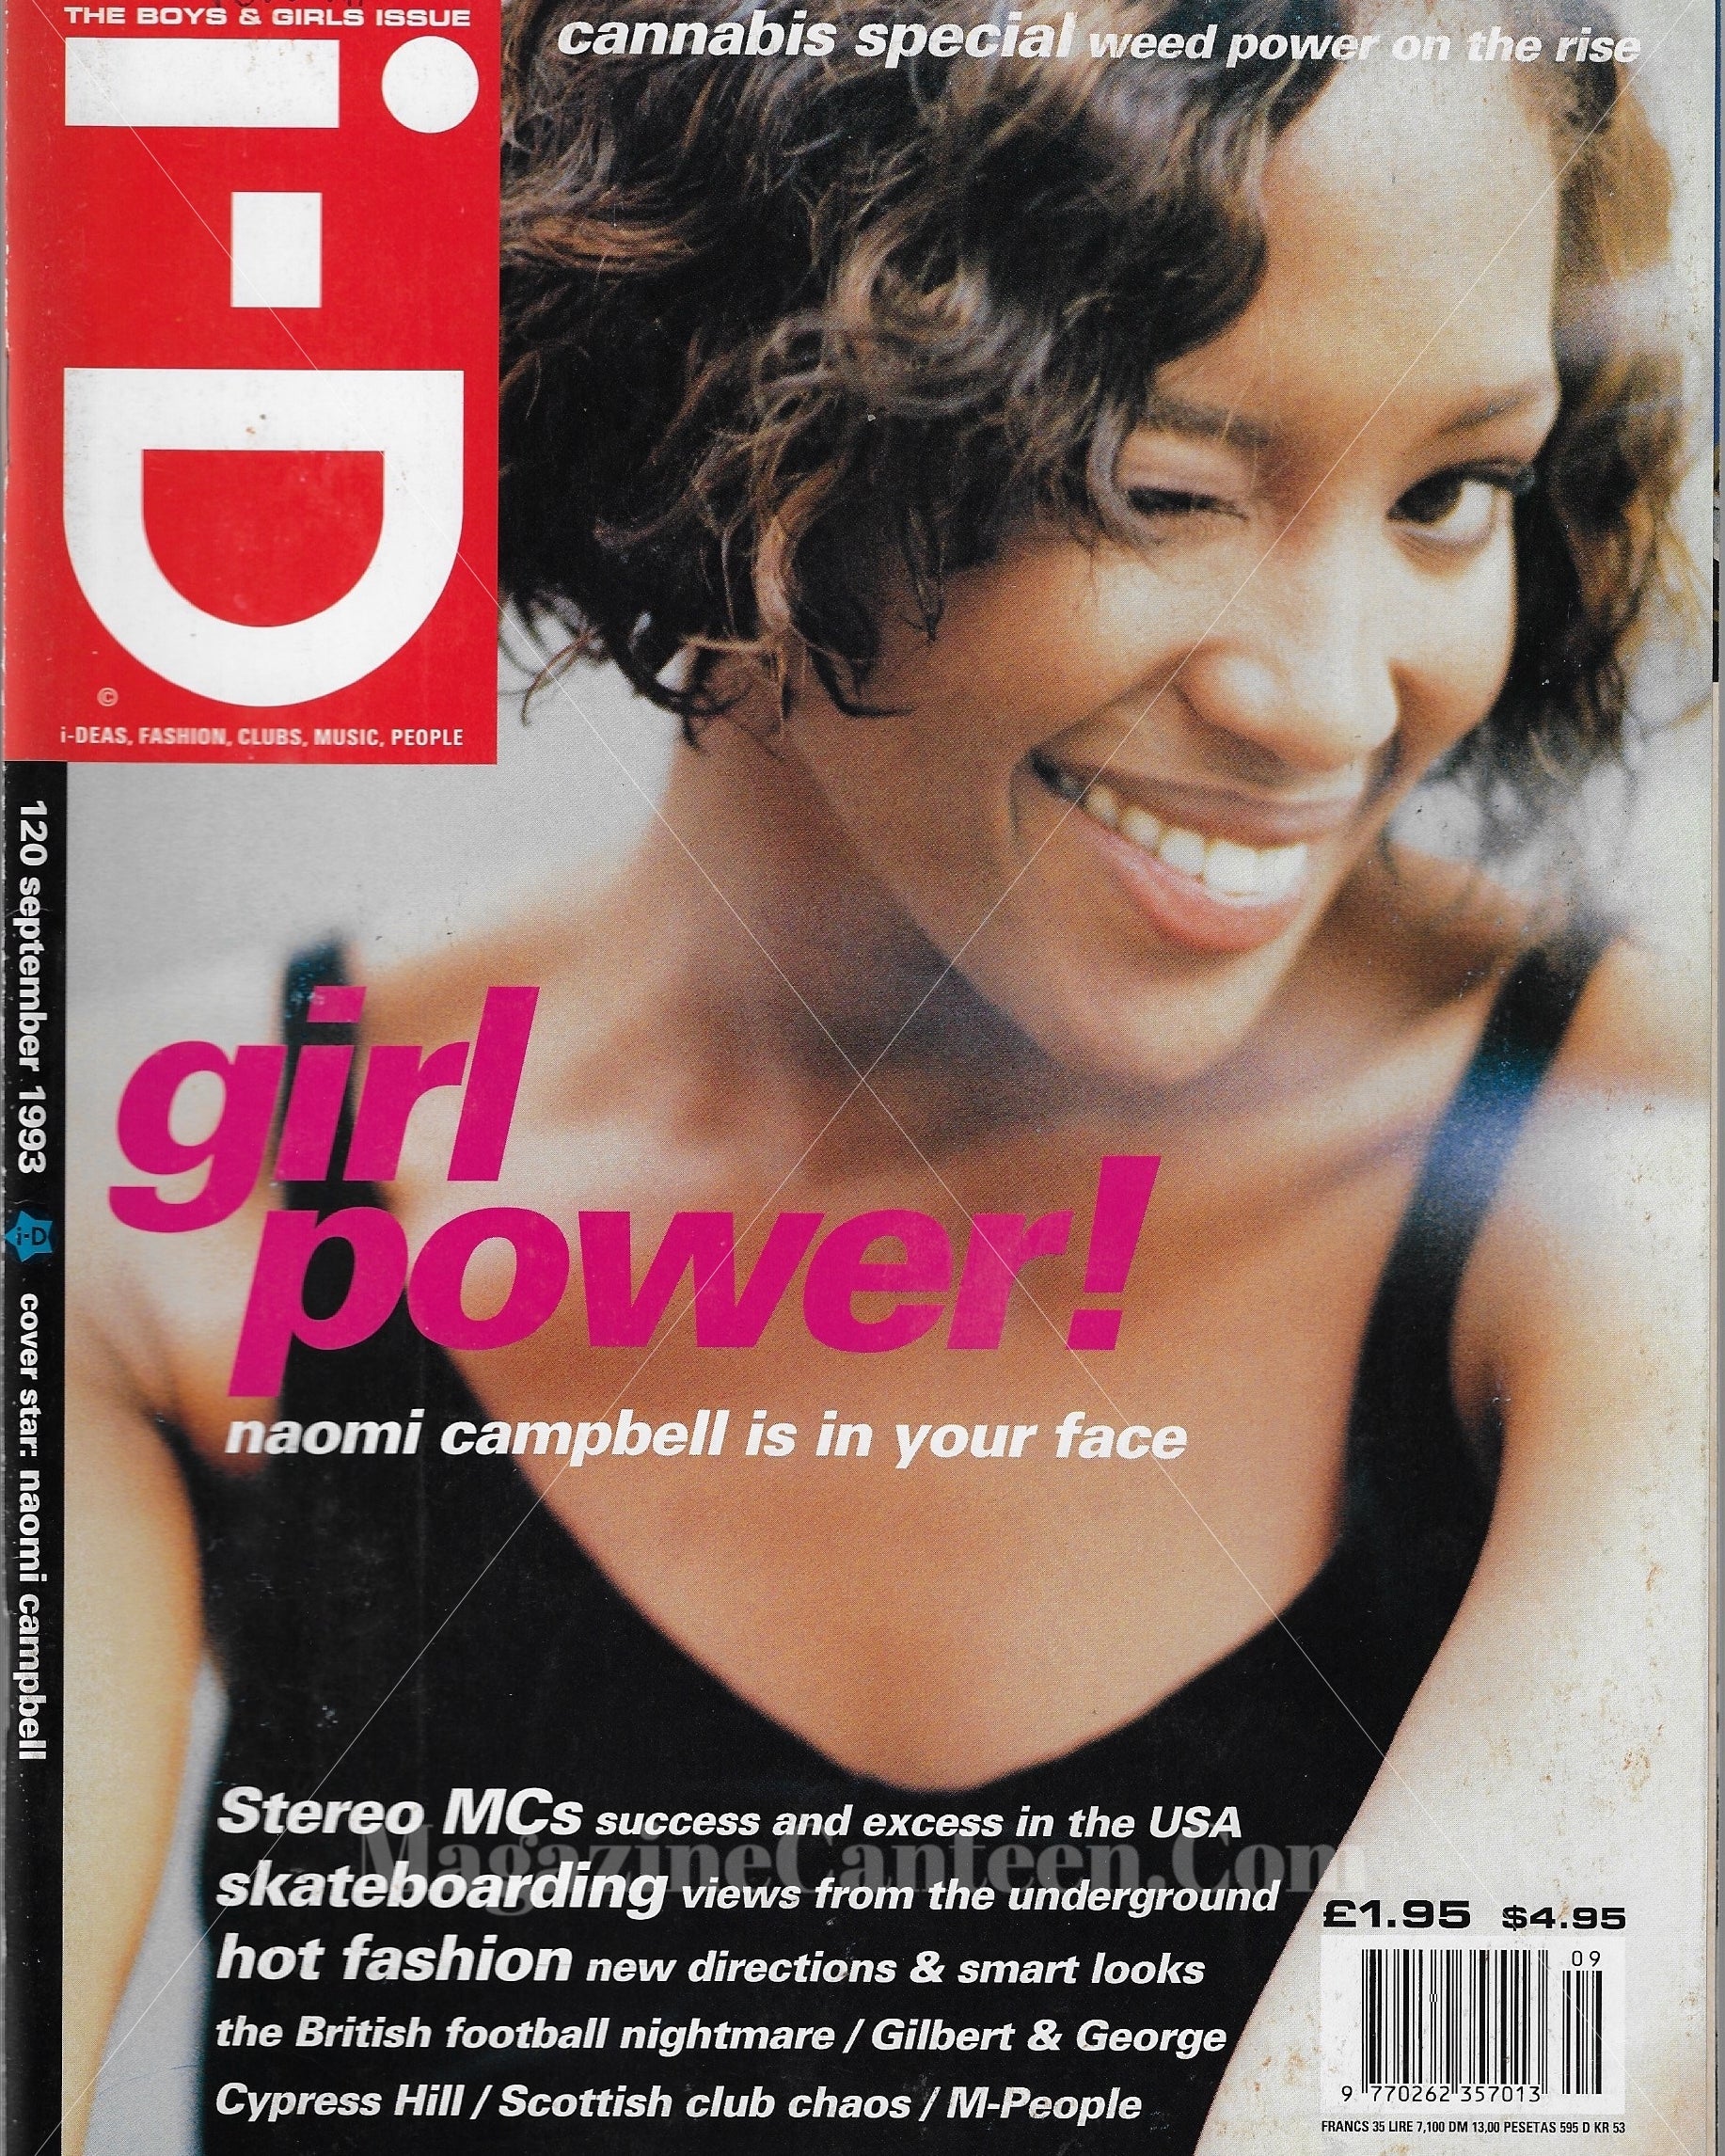 I-D Magazine 120 - Naomi Campbell 1993